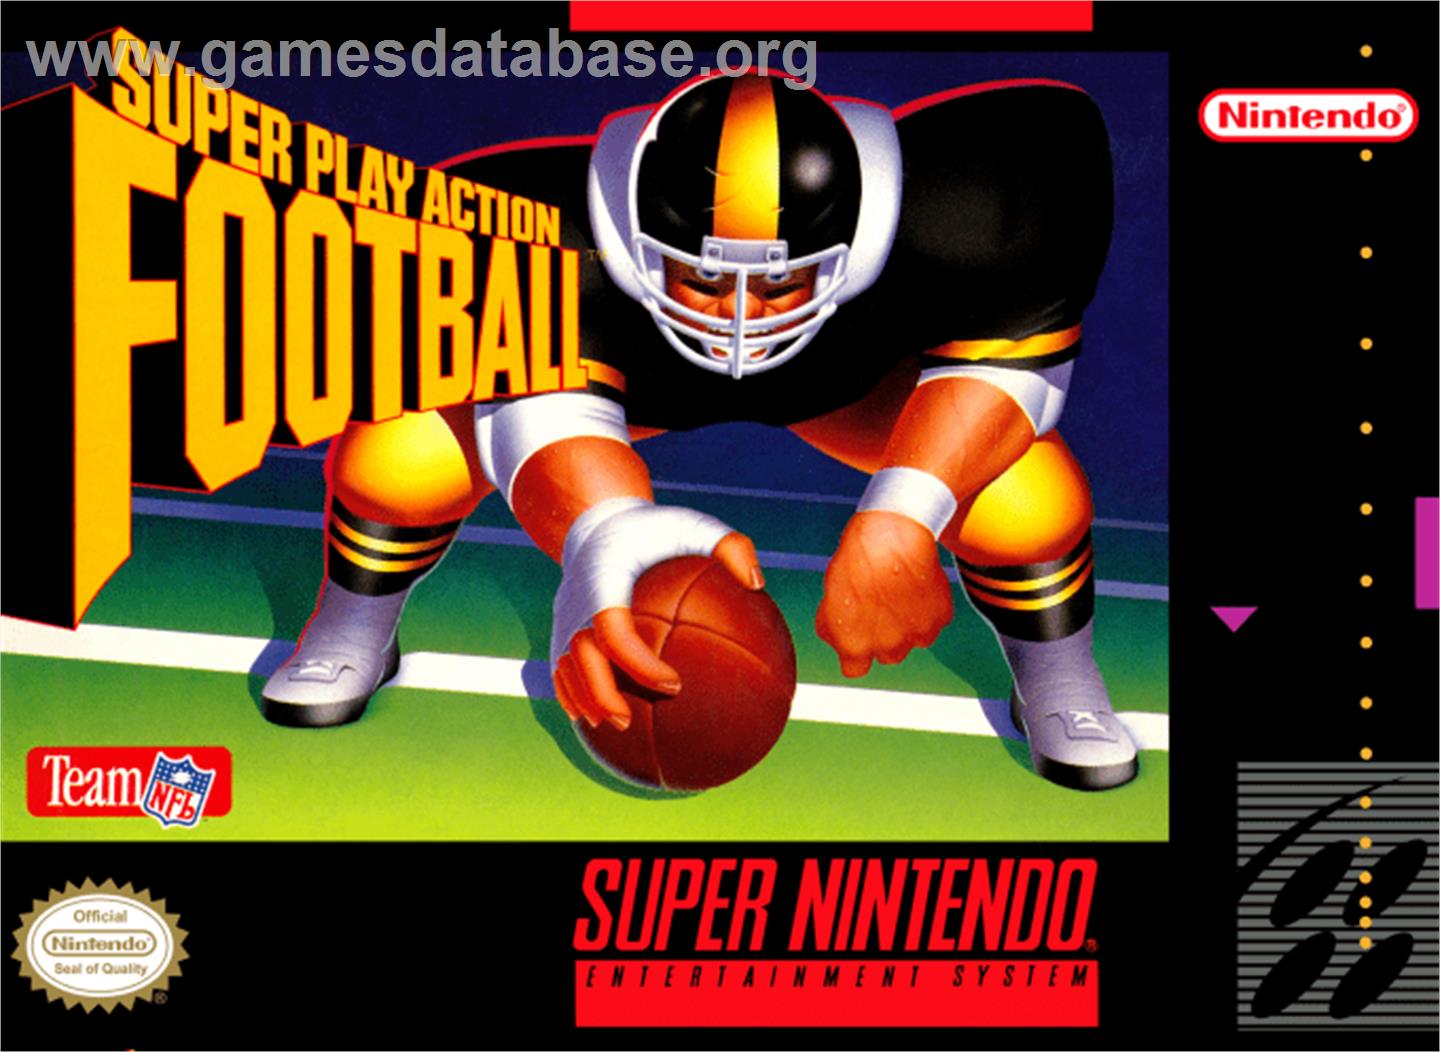 Super Play Action Football - Nintendo SNES - Artwork - Box